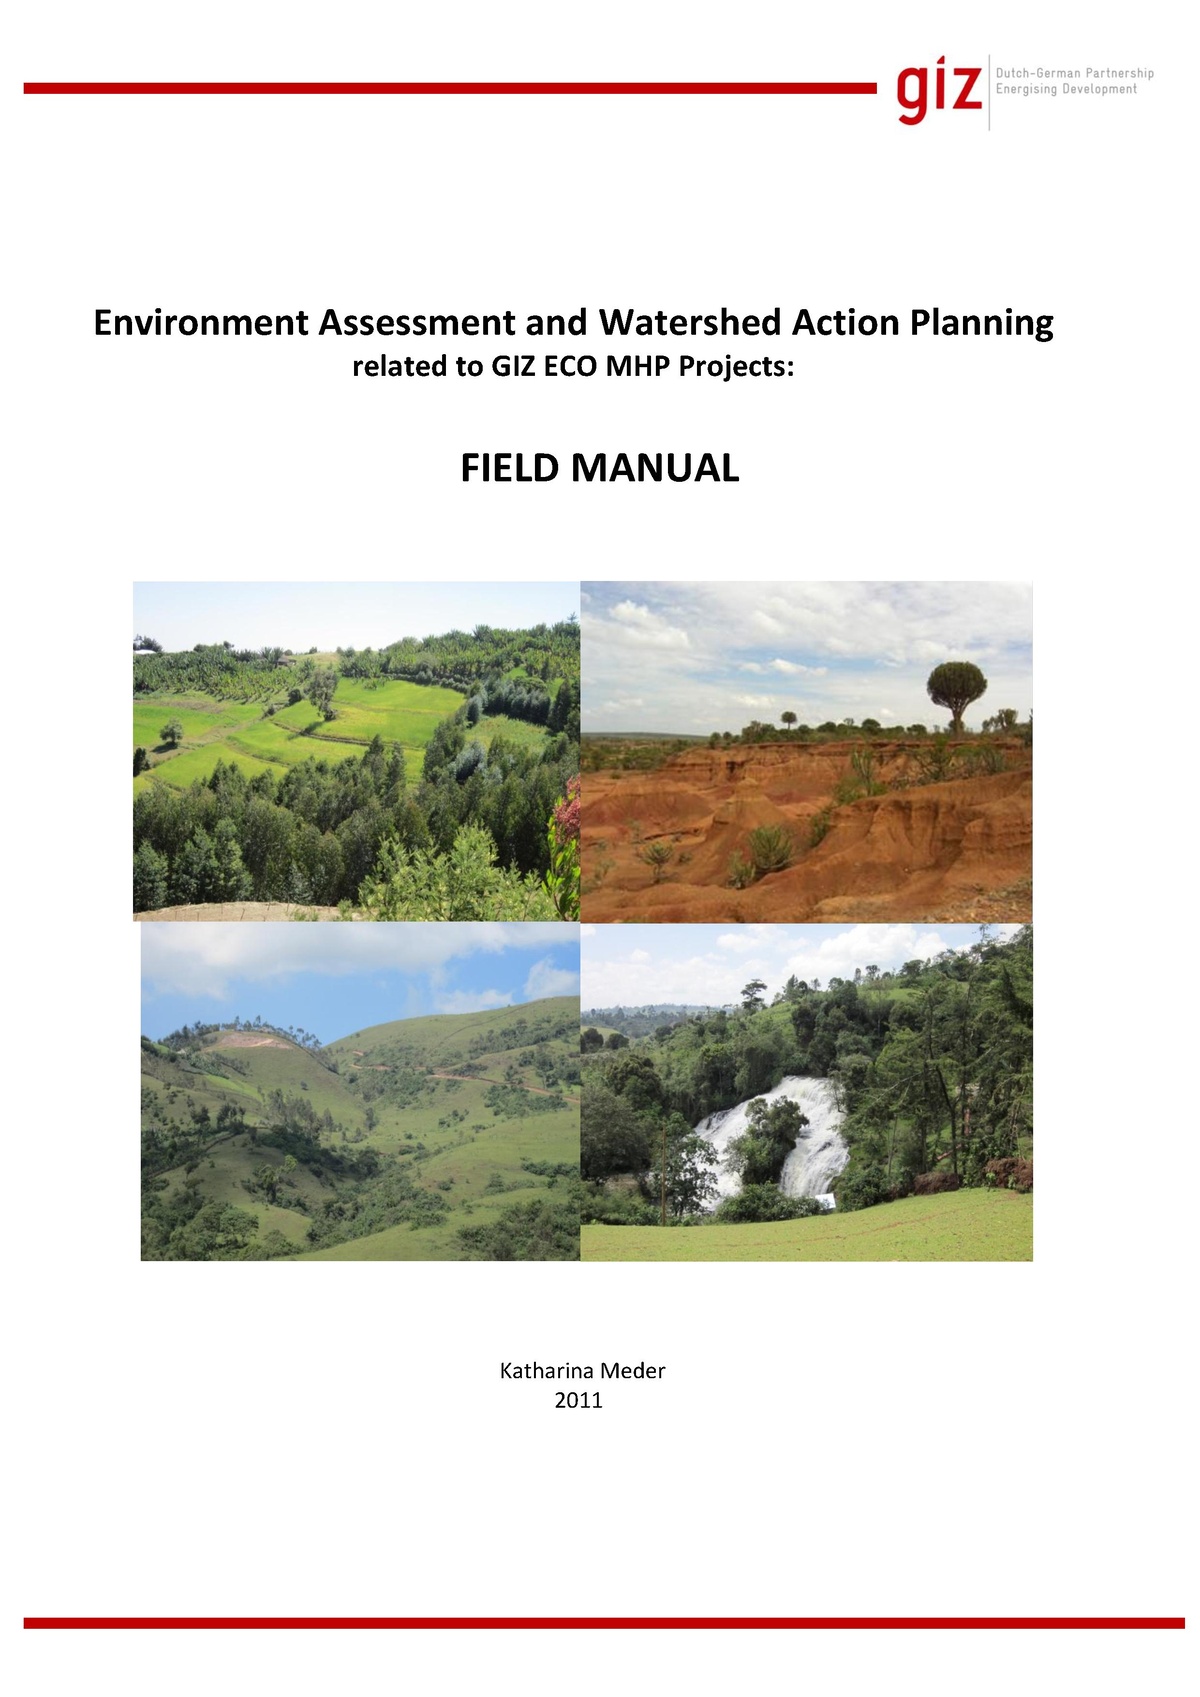 File:EA and WAP field manual NEW.pdf - energypedia